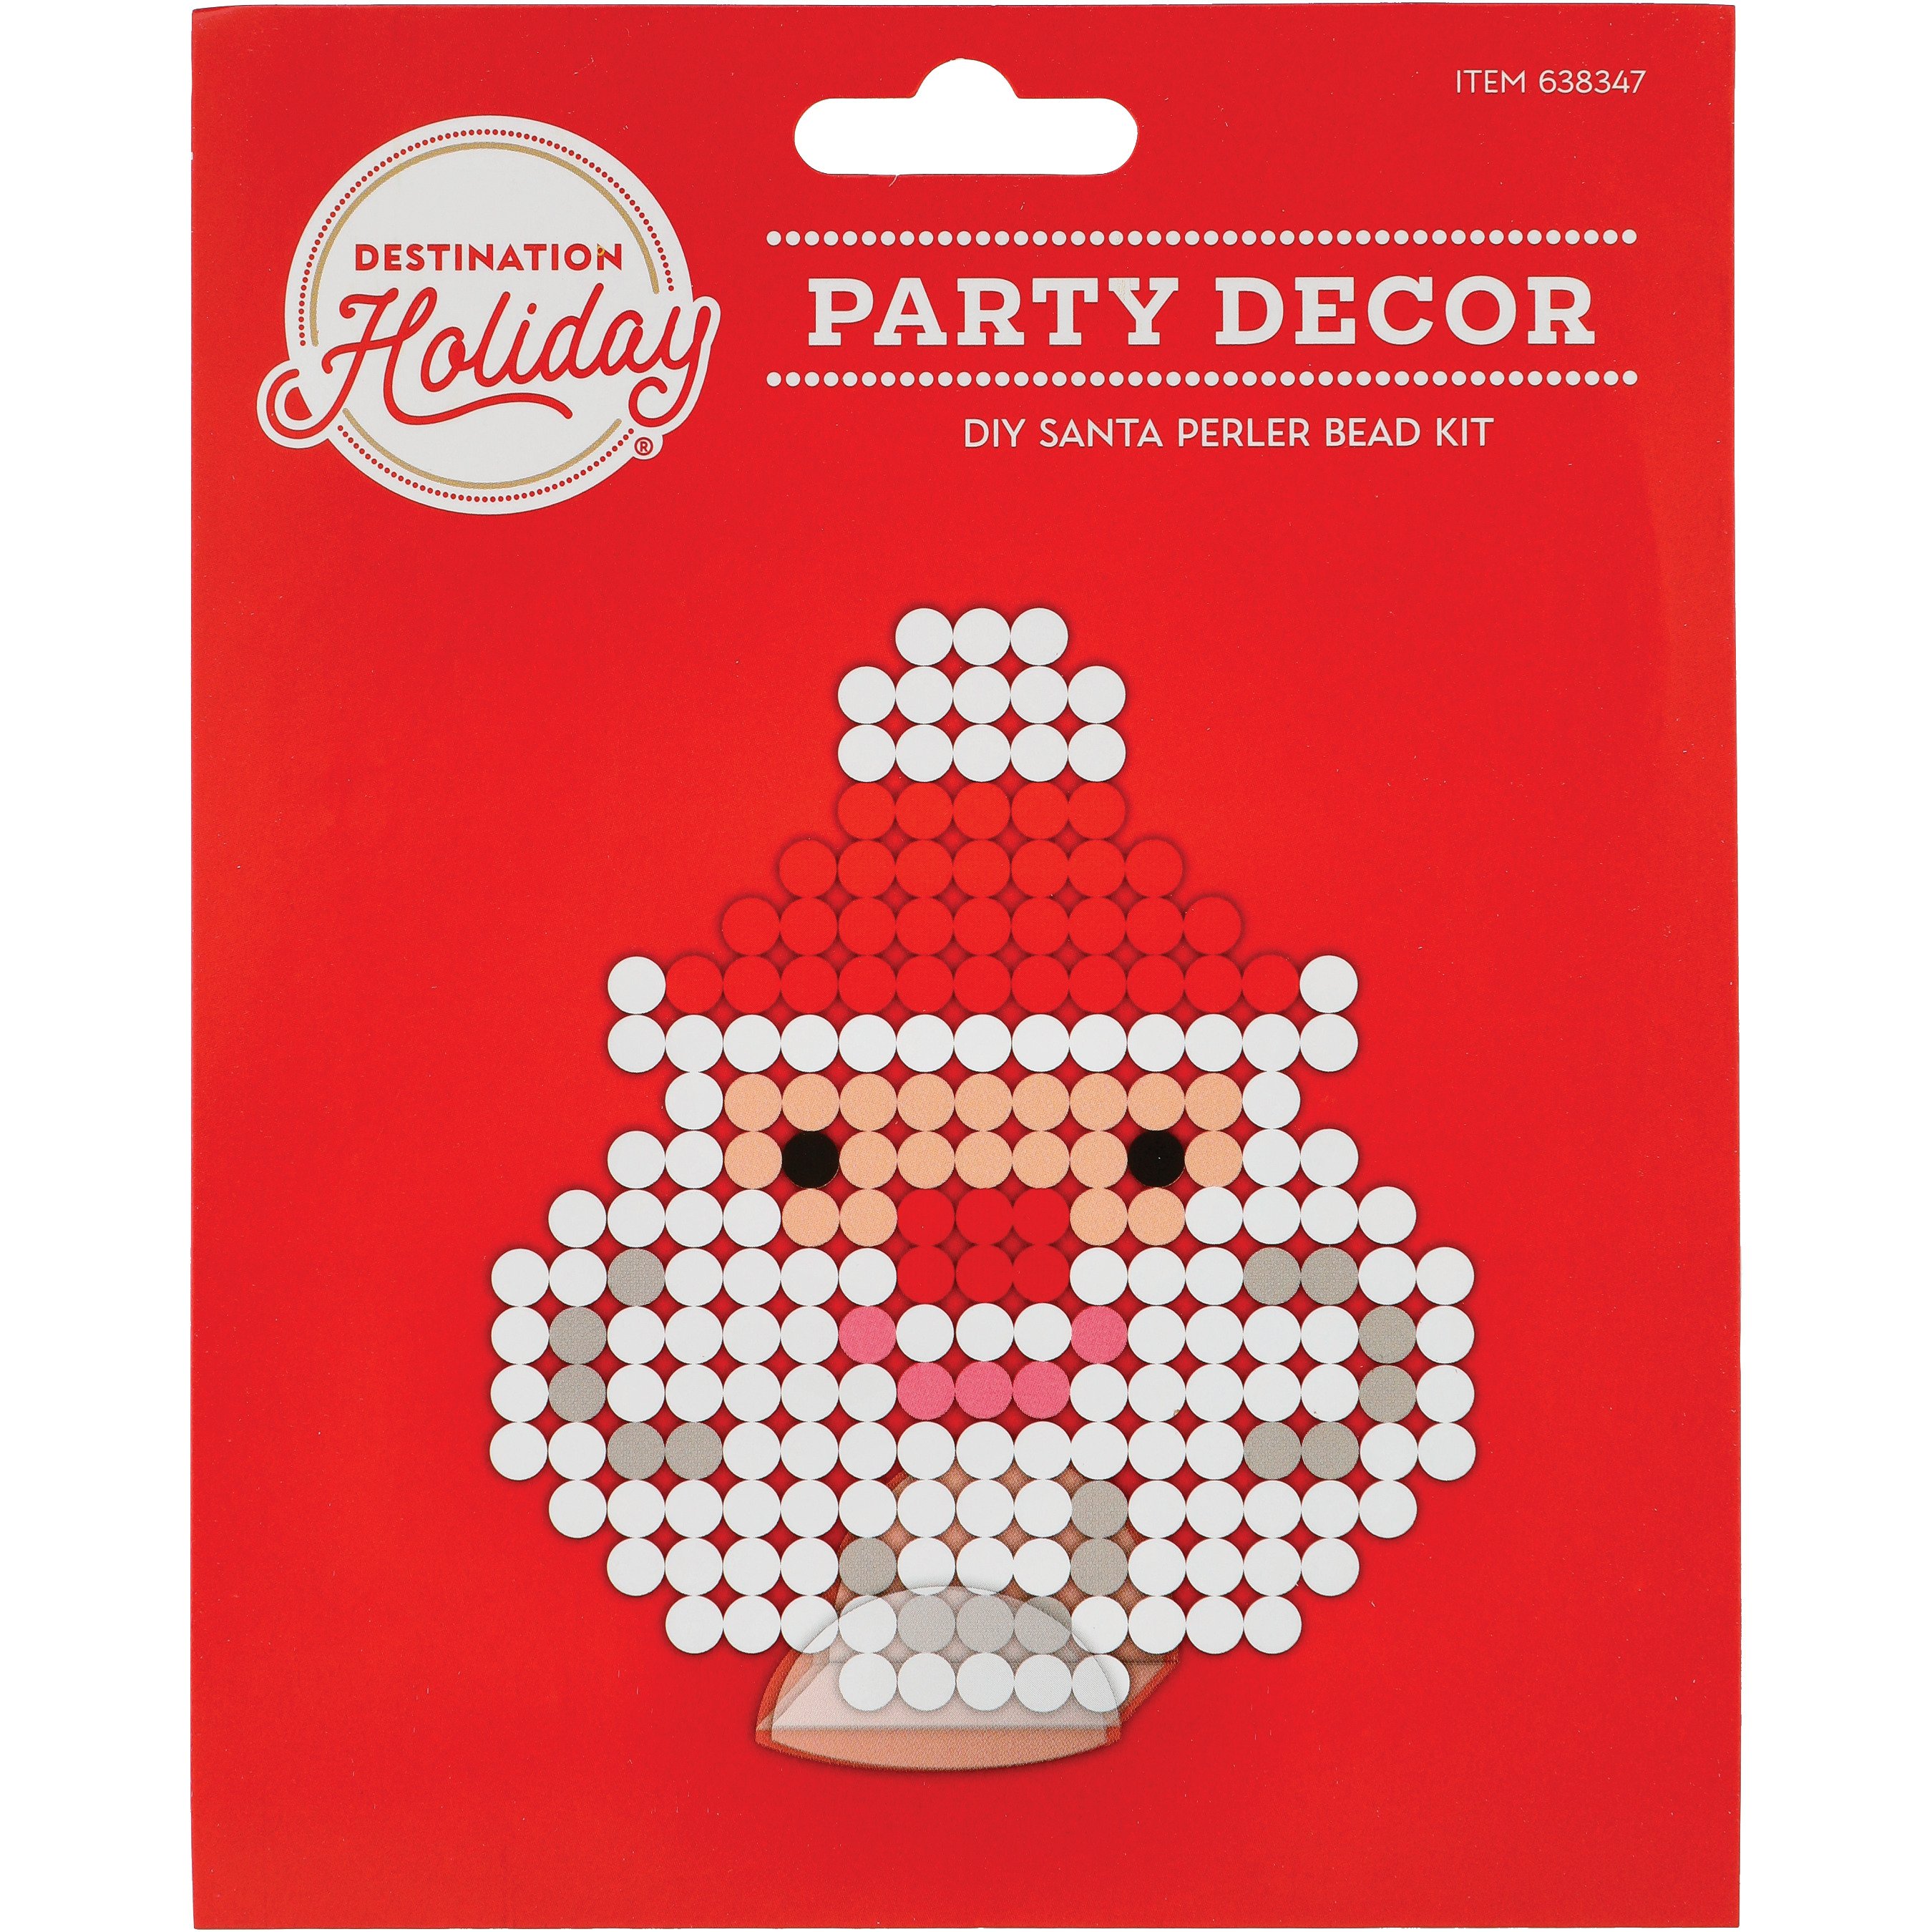 Destination Holiday DIY Santa Perler Bead Kit - Shop Party Decor